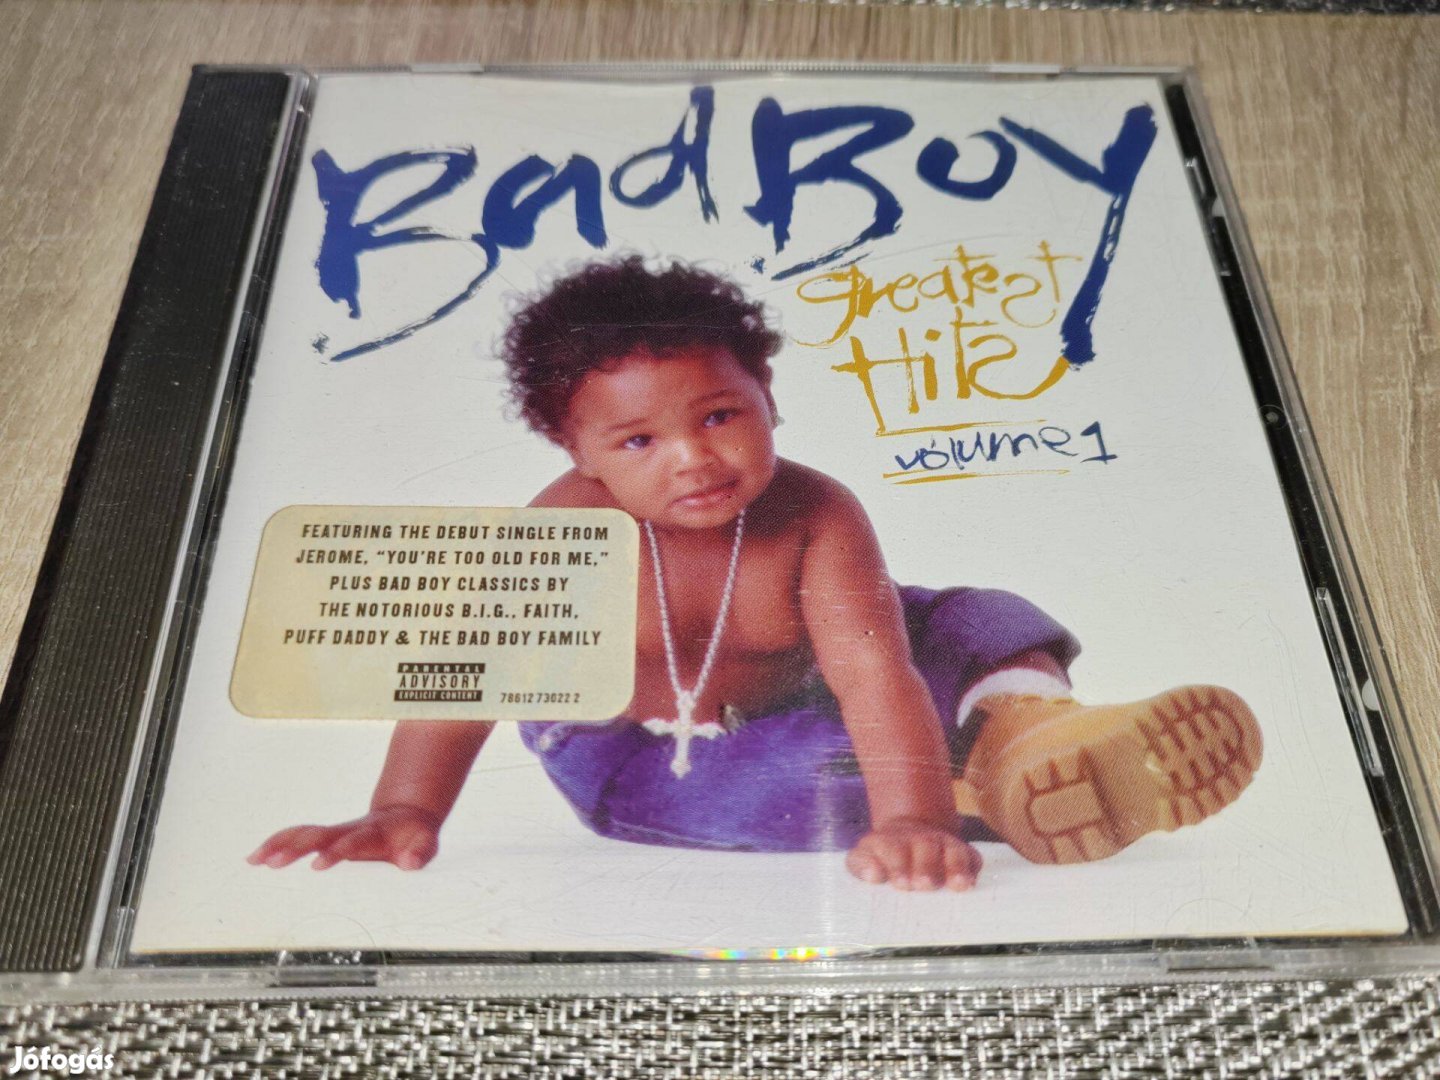 Bad Boy greatest hits